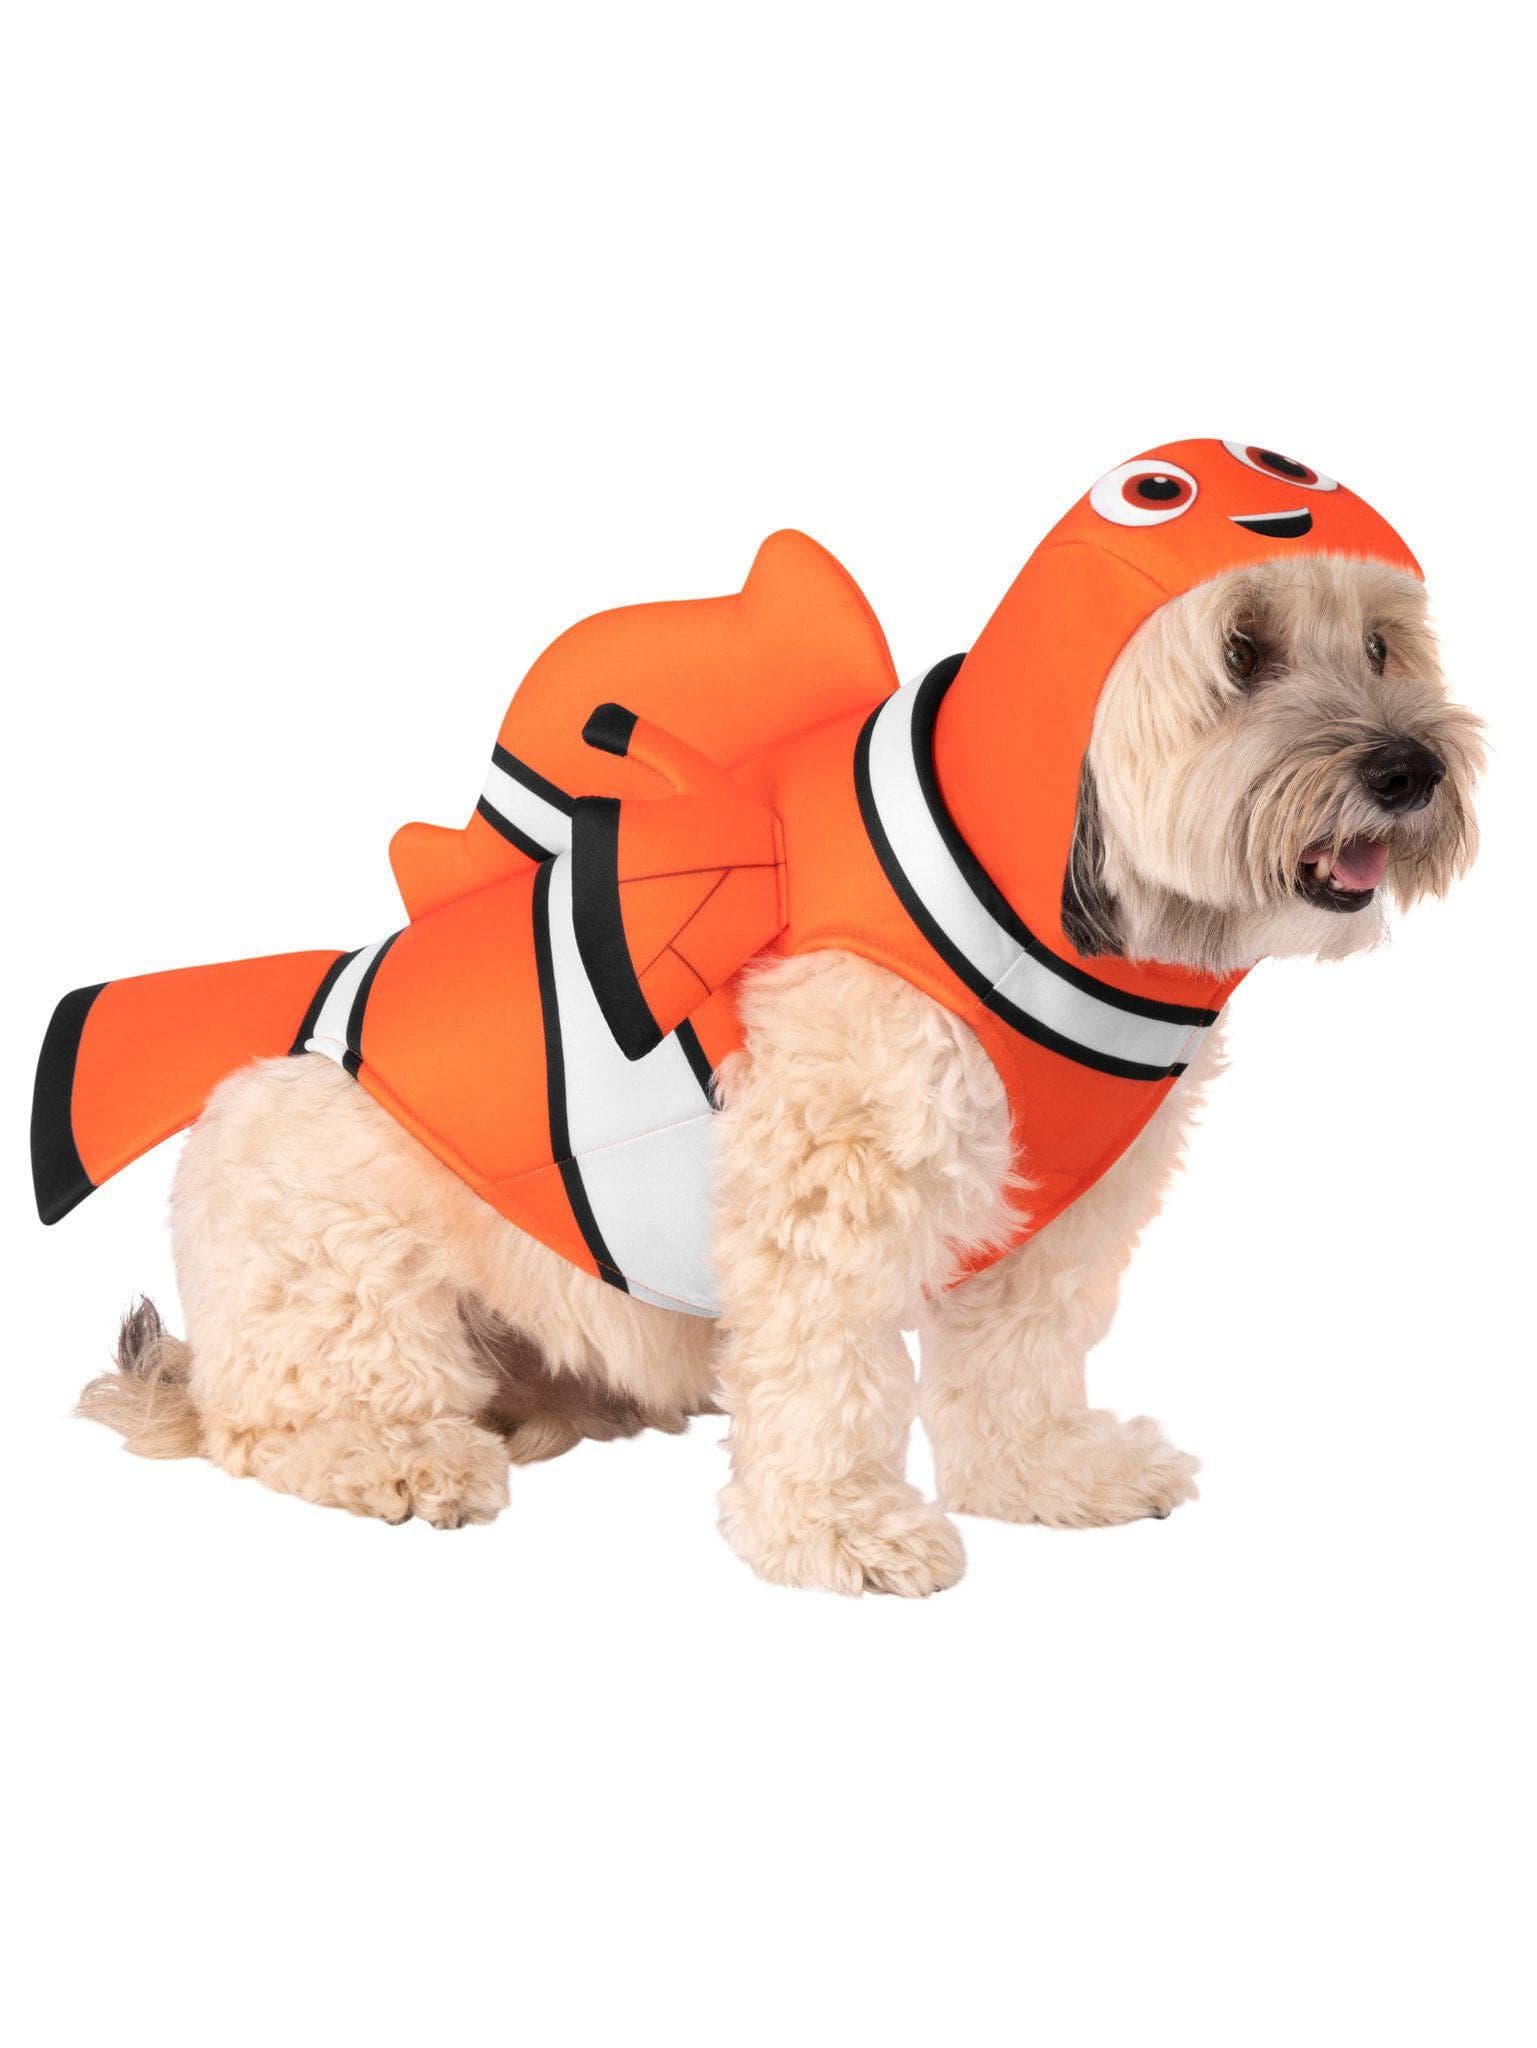 Finding Nemo - Nemo Pet Costume - costumes.com